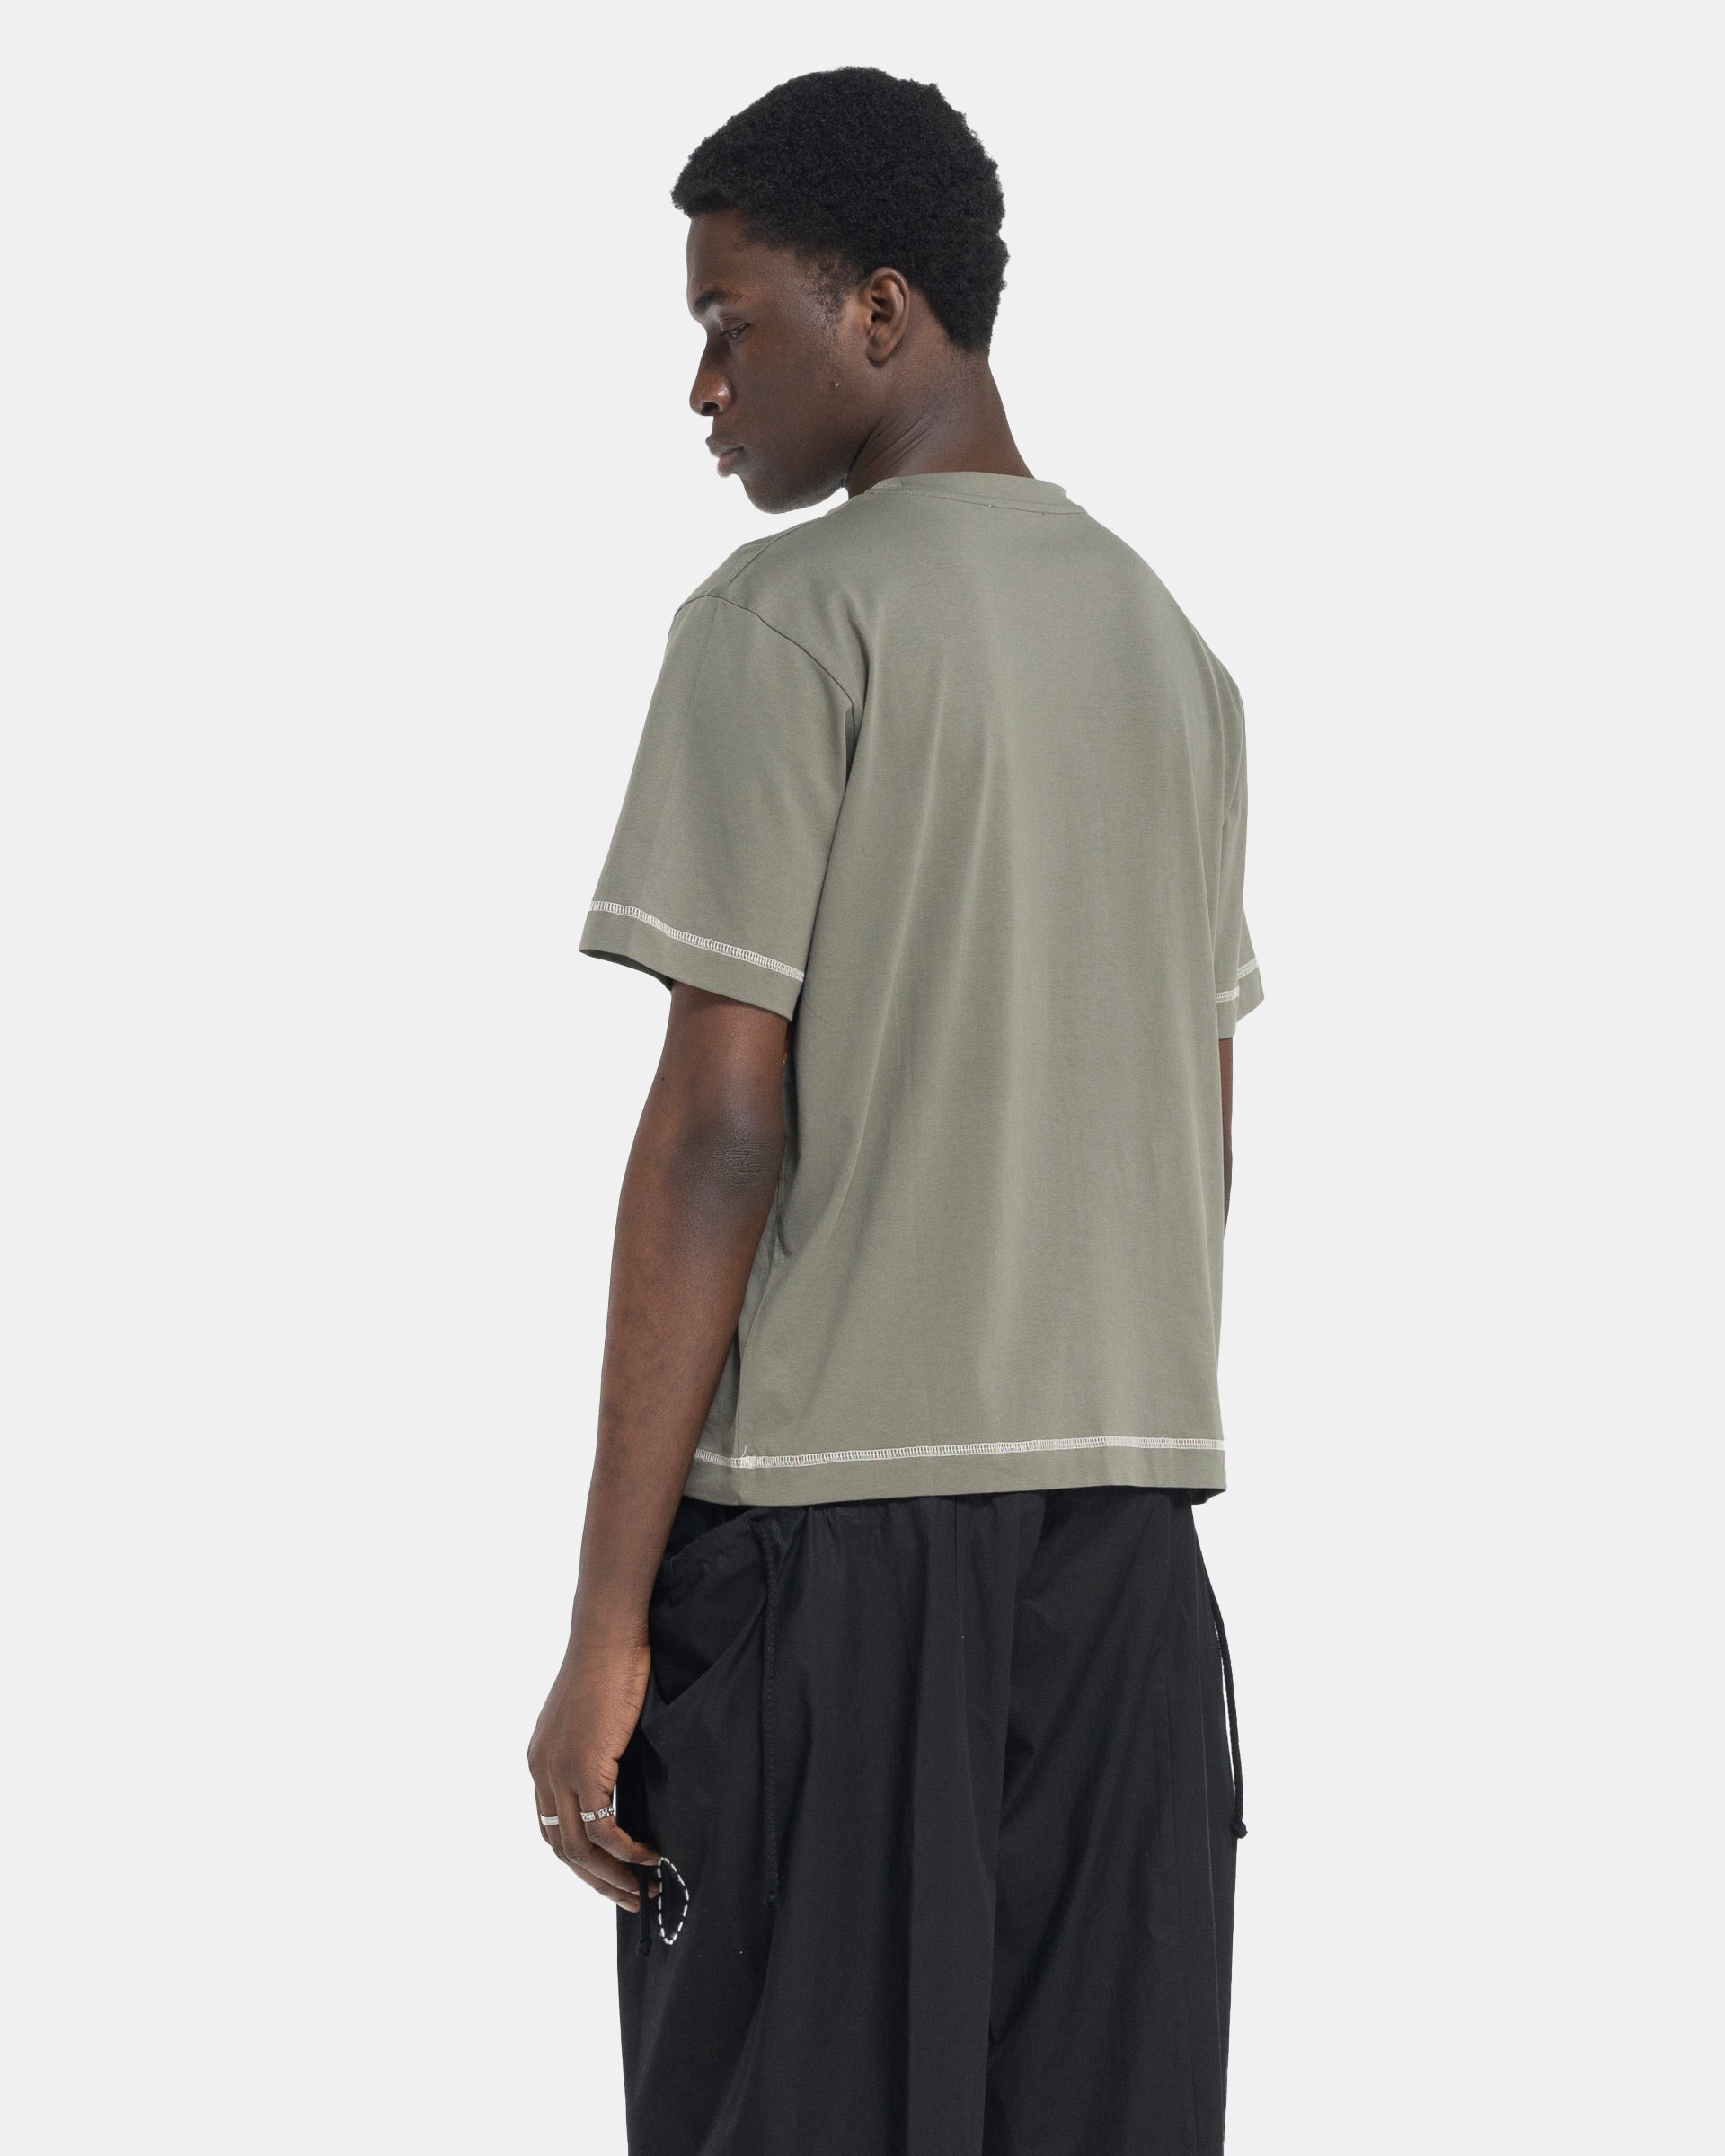 Model wearing Craig Green Flatlock Stripe T-Shirt in Olive on white background